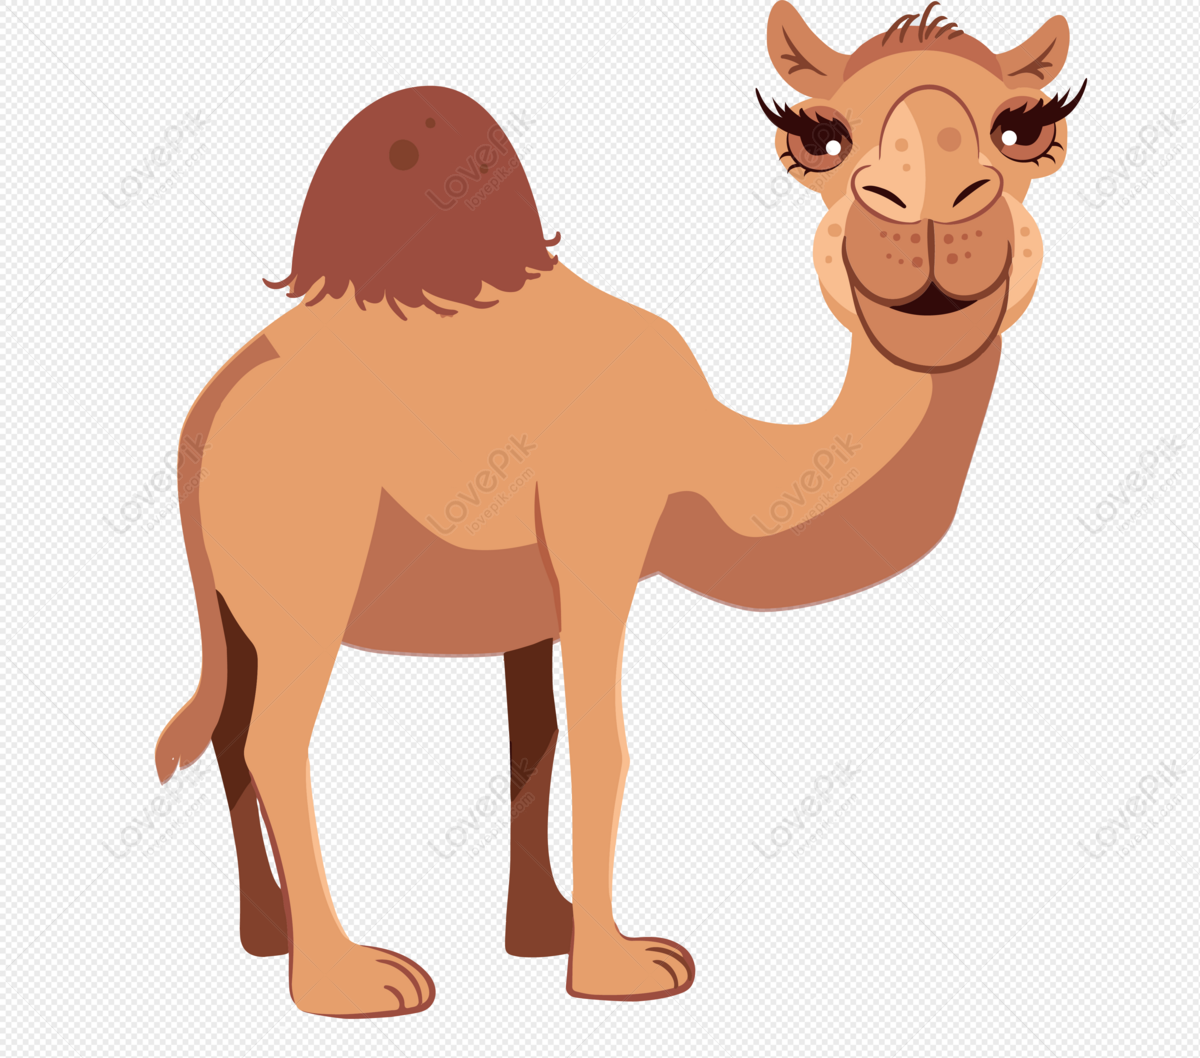 camels in desert clipart